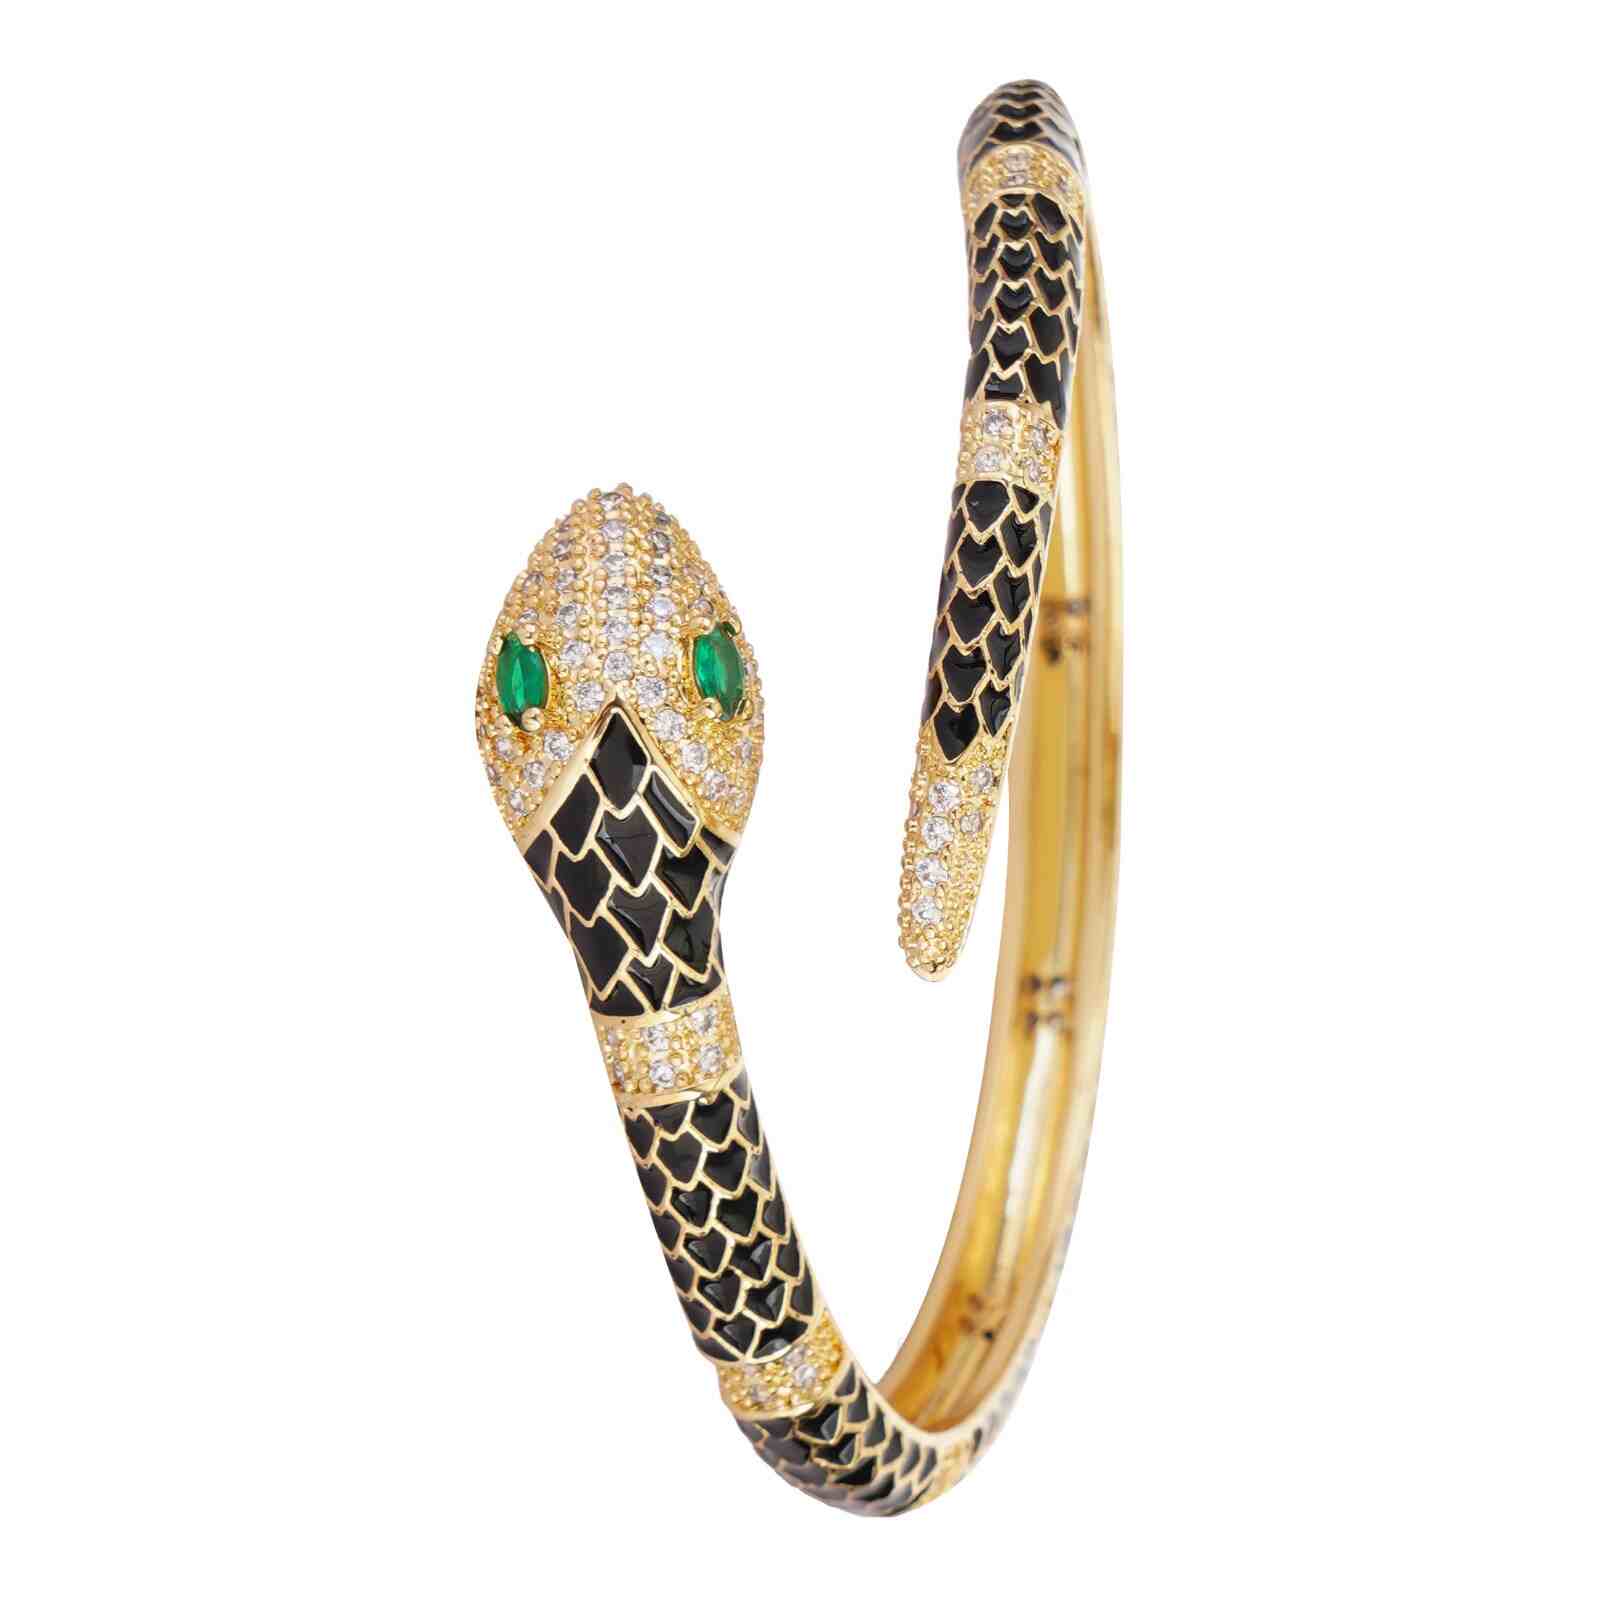 Authentic! Bulgari Bvlgari Serpenti Viper 18k Rose Gold Diamond Bangle  Bracelet | eBay